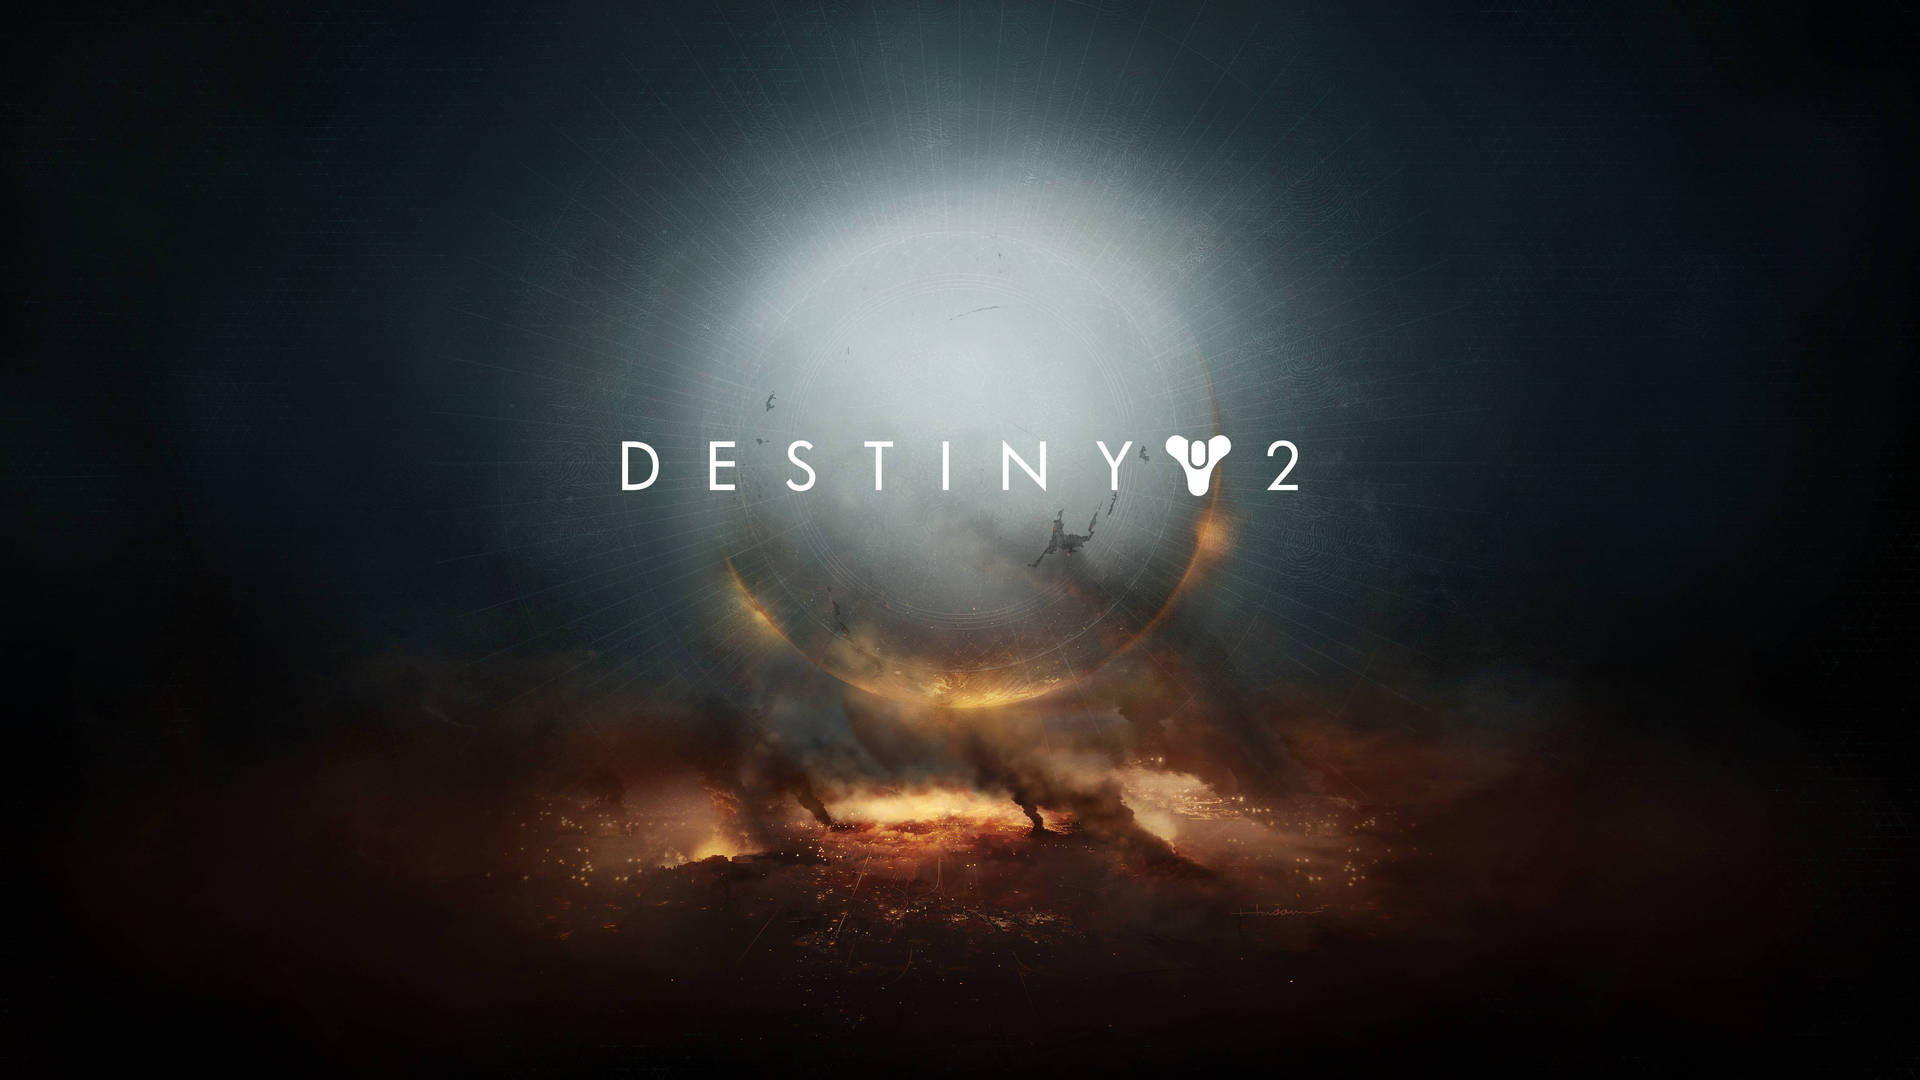 Cool Destiny 2 Cover